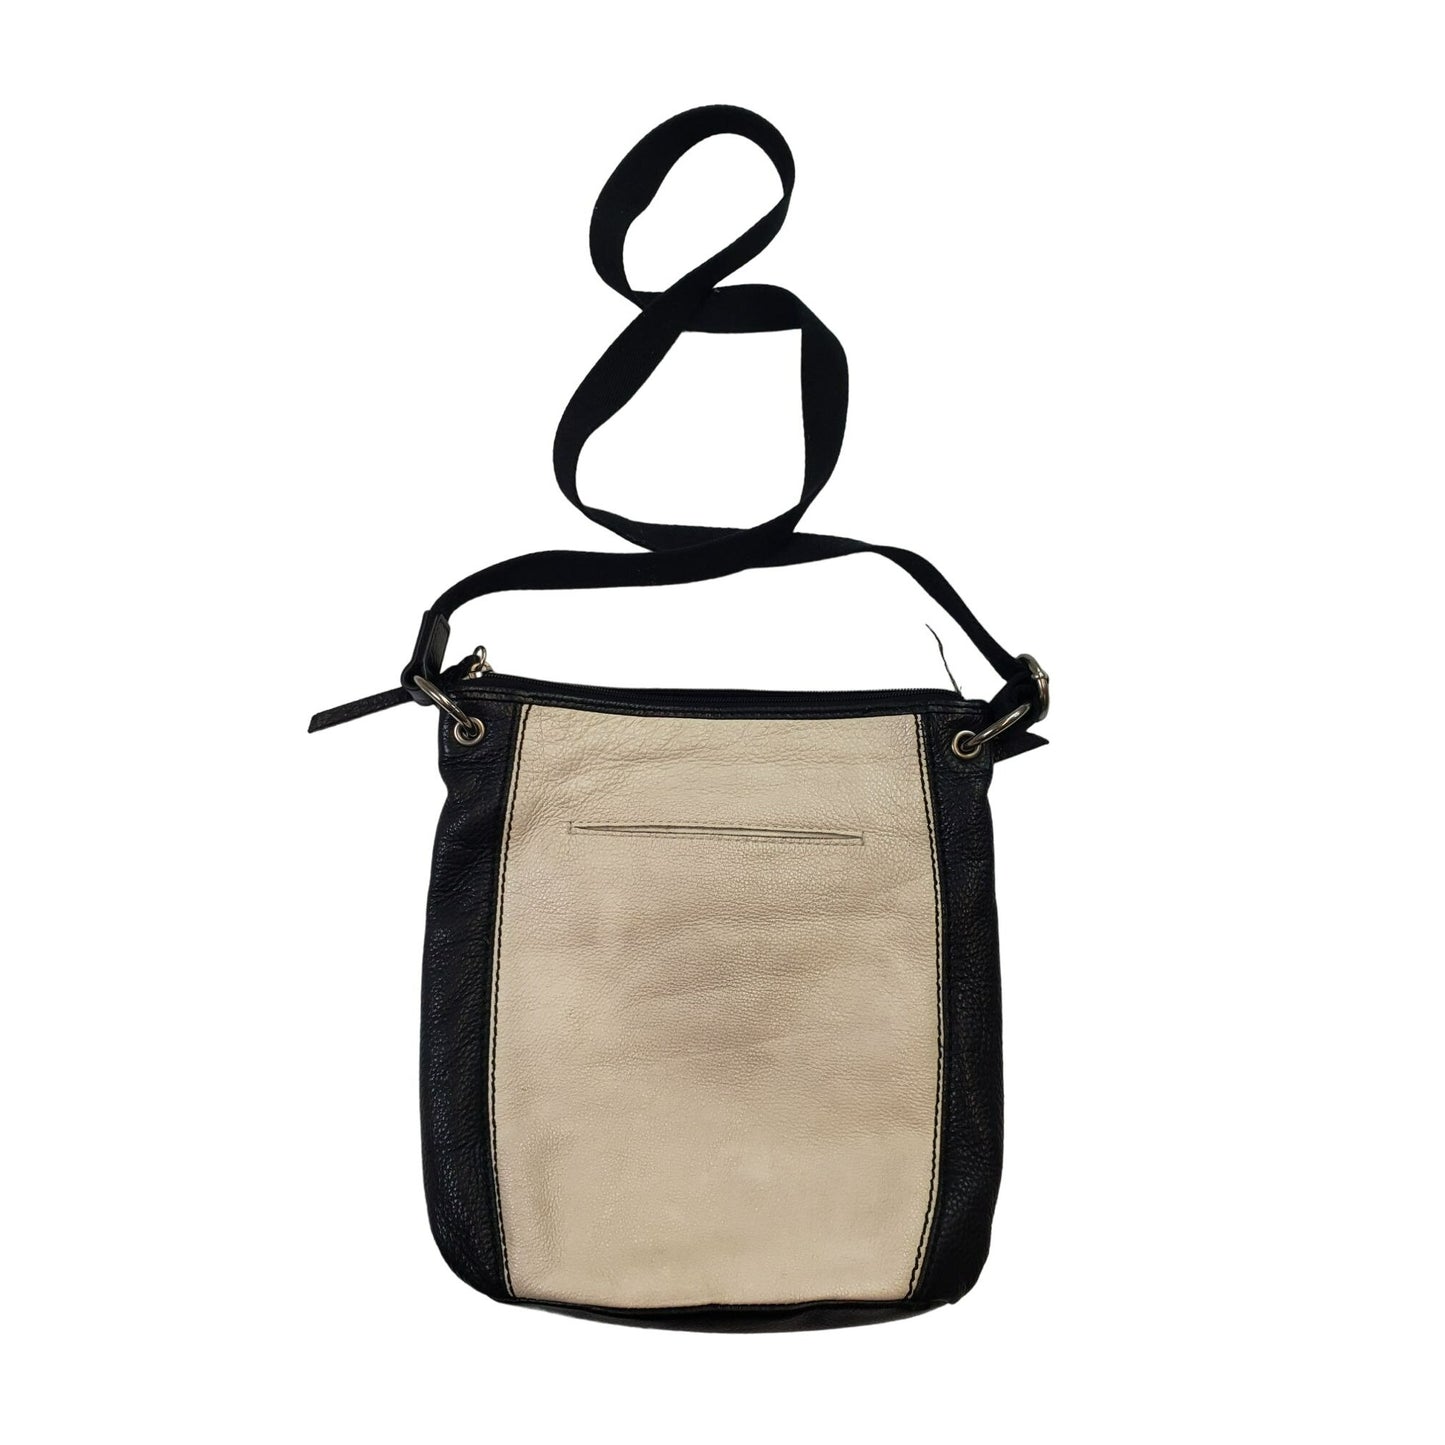 The Sak Laurel Color Block Leather Crossbody Bag